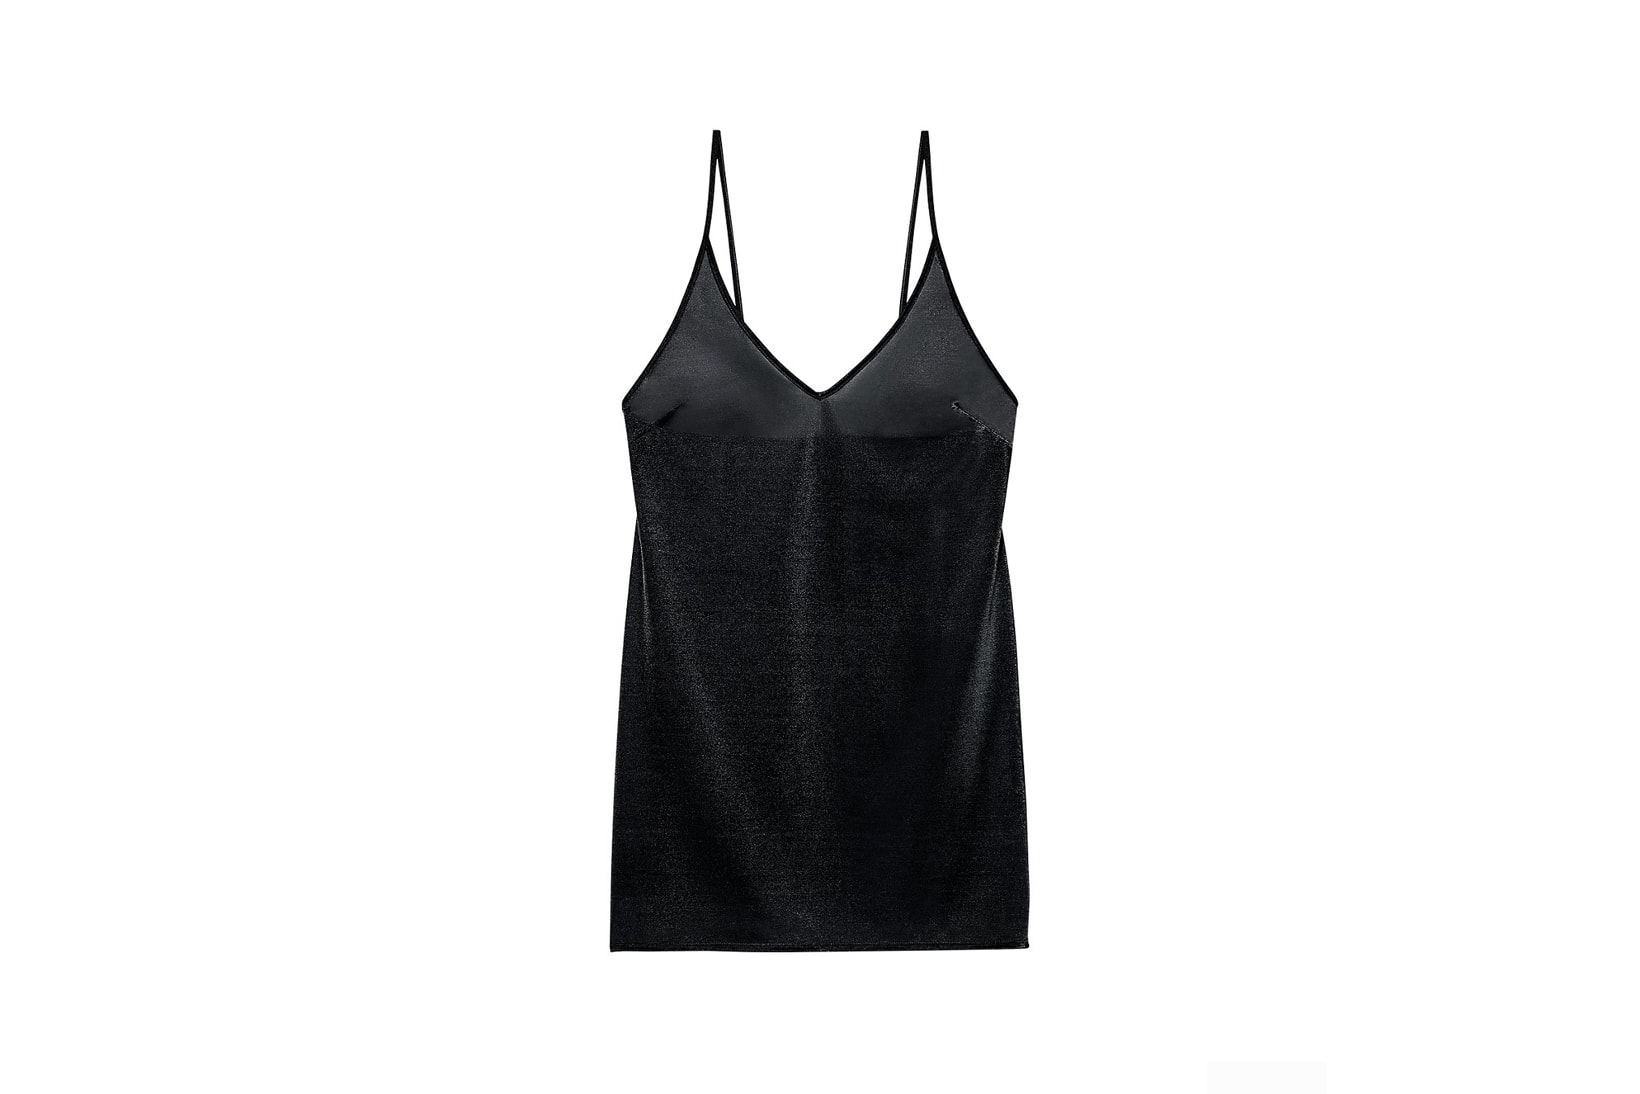 Savage X Fenty Fall Winter 2019 Lingerie Collection Slip Dress Black Amazon